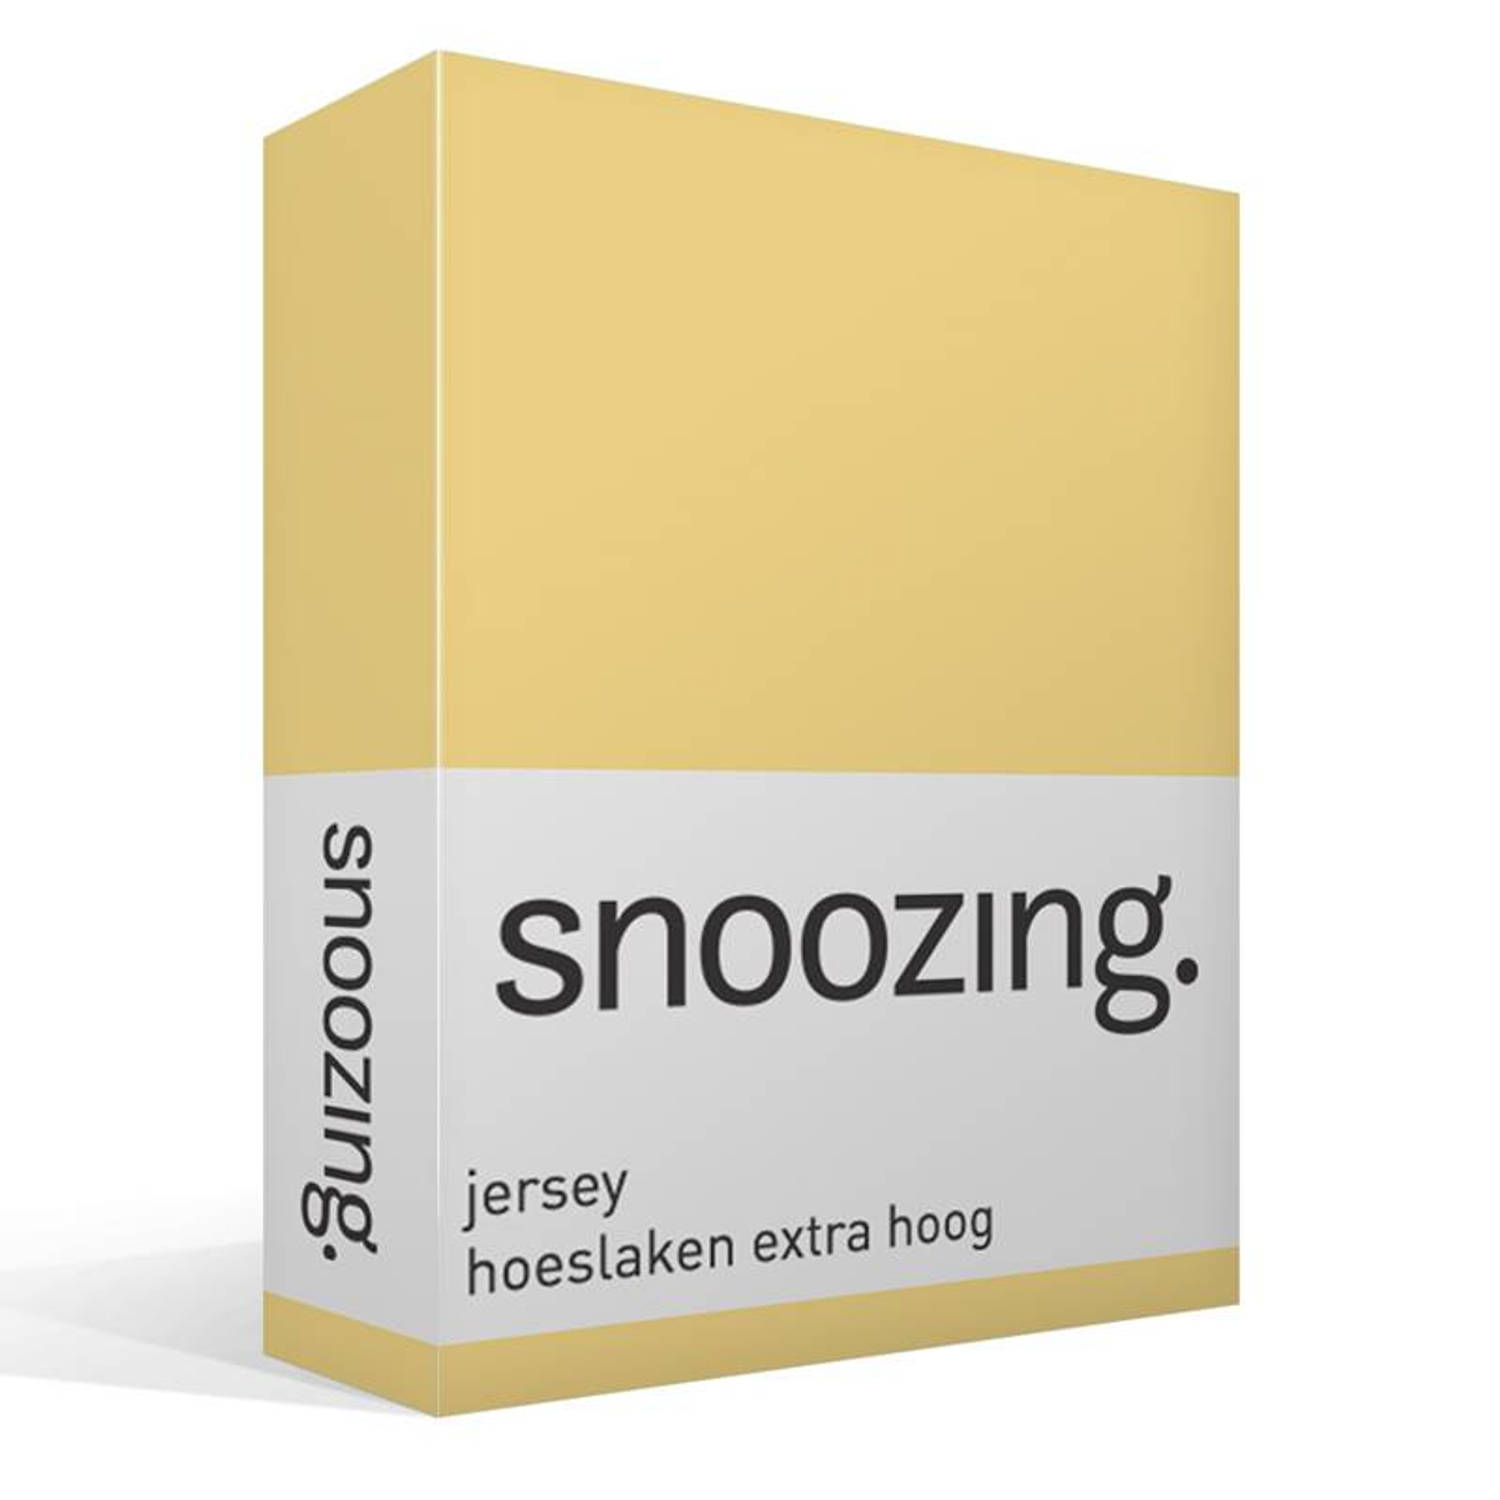 Snoozing jersey hoeslaken extra hoog - 100% gebreide katoen - Lits-jumeaux (160x210/220 cm) - Geel